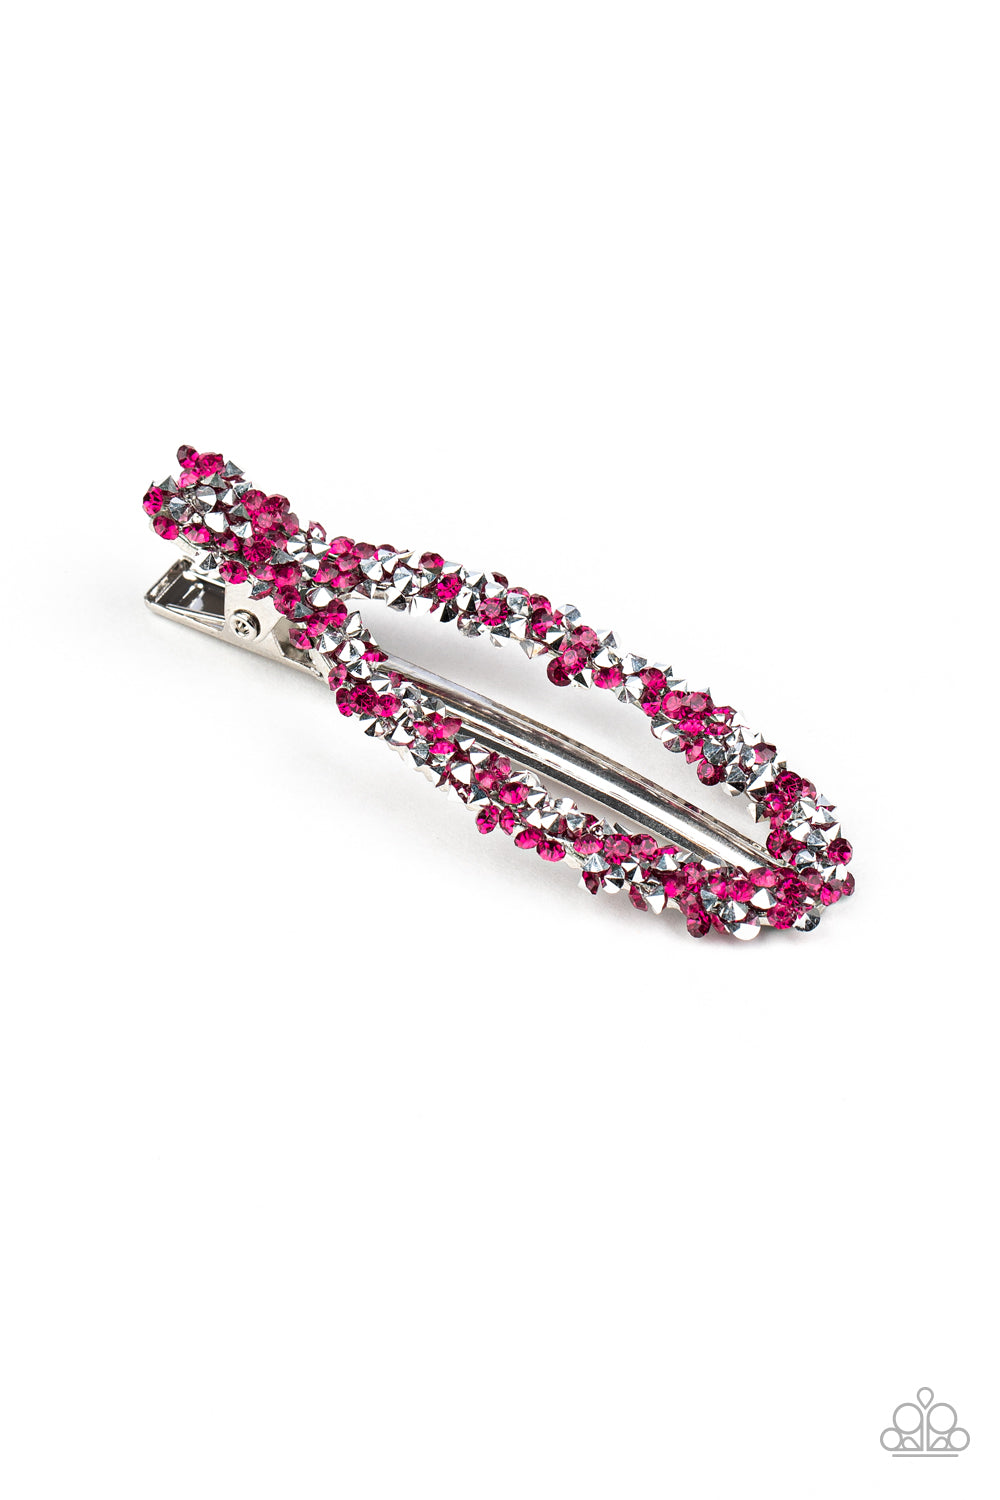 Paparazzi HAIR We Go! - Pink - Glittery Rhinestones - Hair Clip - $5 Jewelry with Ashley Swint